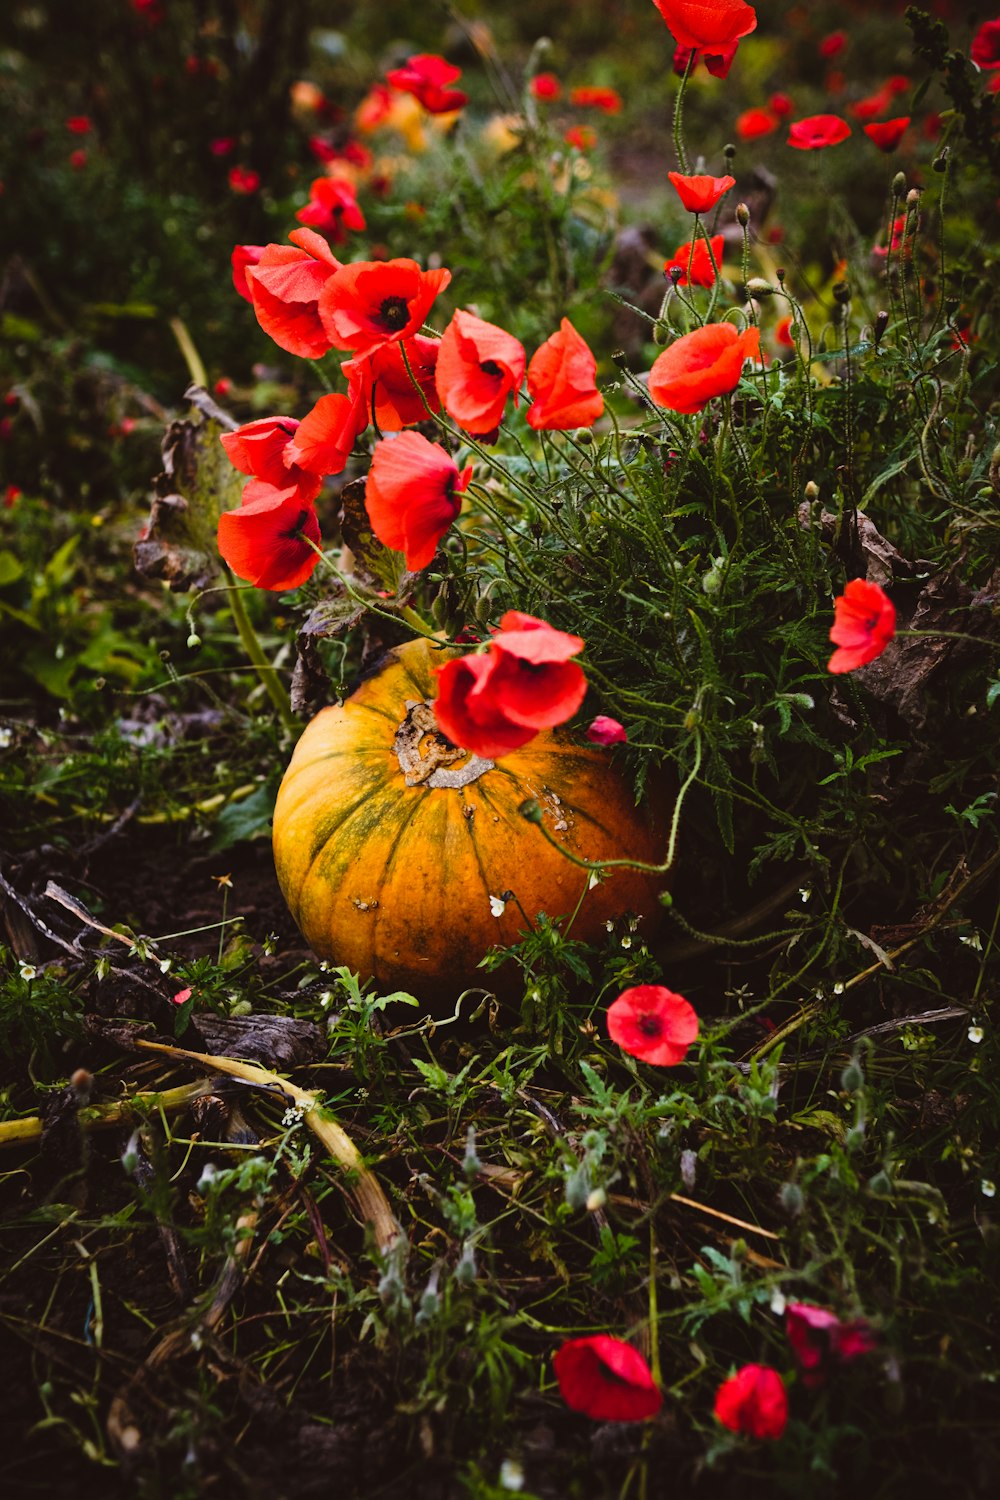 a pumpkin sitting in a field of red flowers